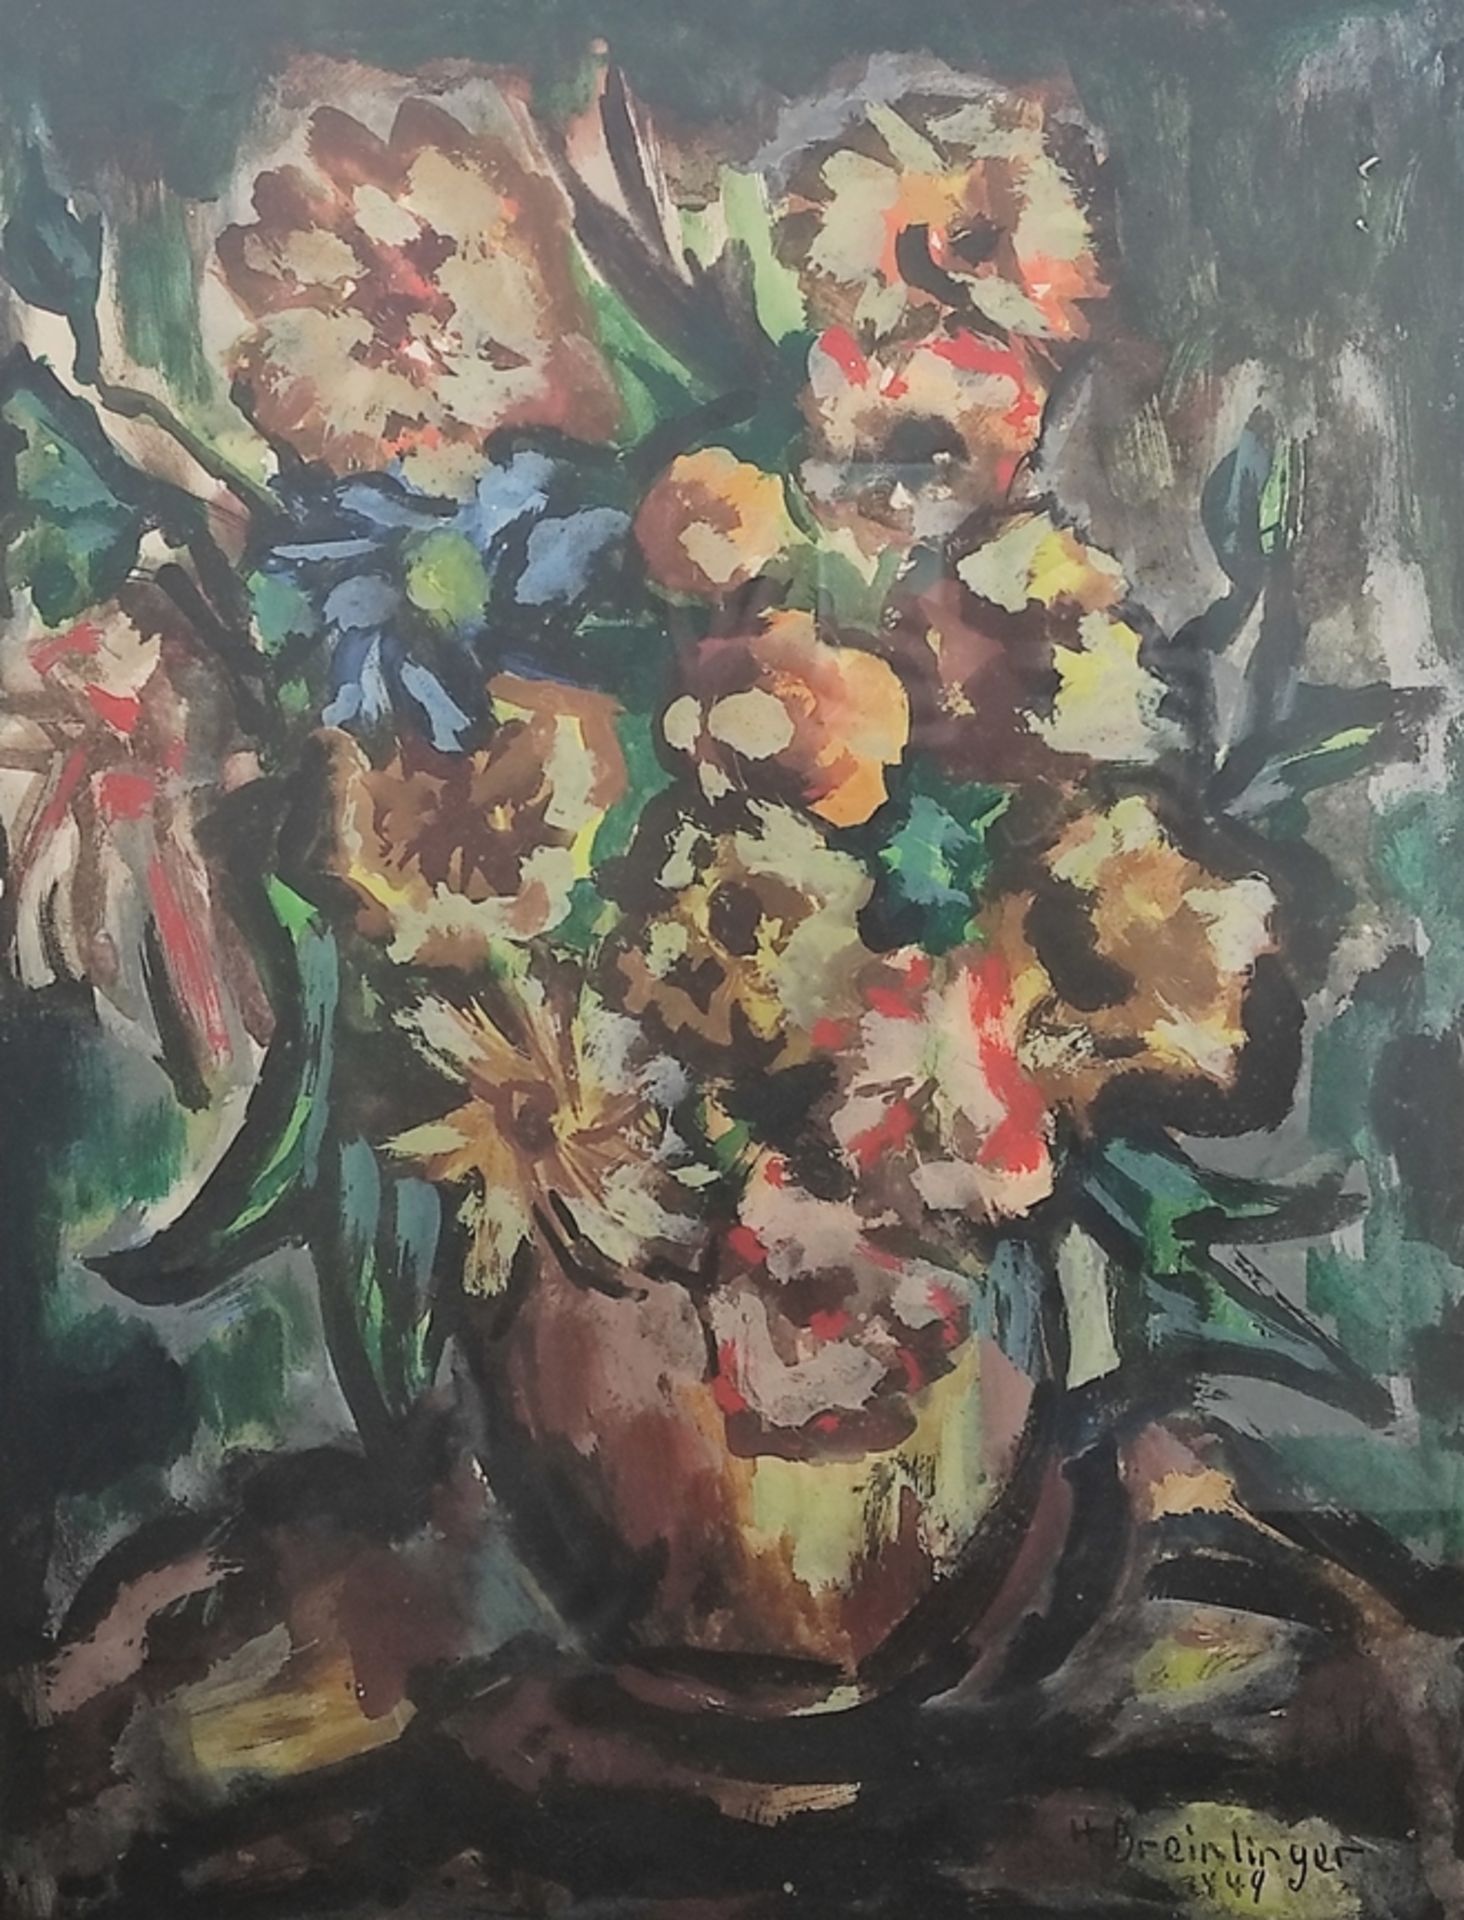 Breinlinger, Hans (1888 - 1963 Constance) "Flower Still Life", spring-like bouquet in strong colors